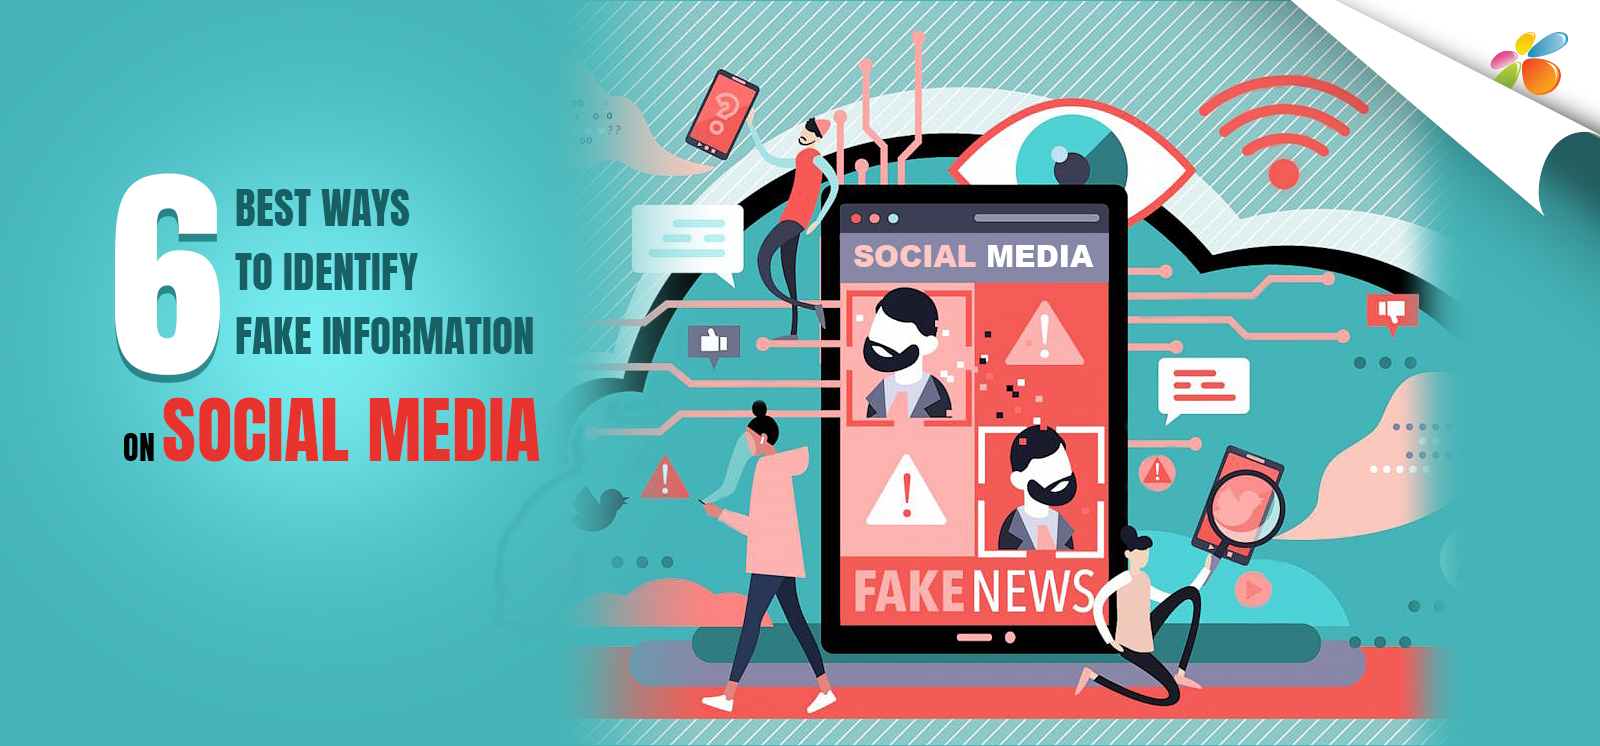 6 Best Ways to Identify Fake Information on Social Media